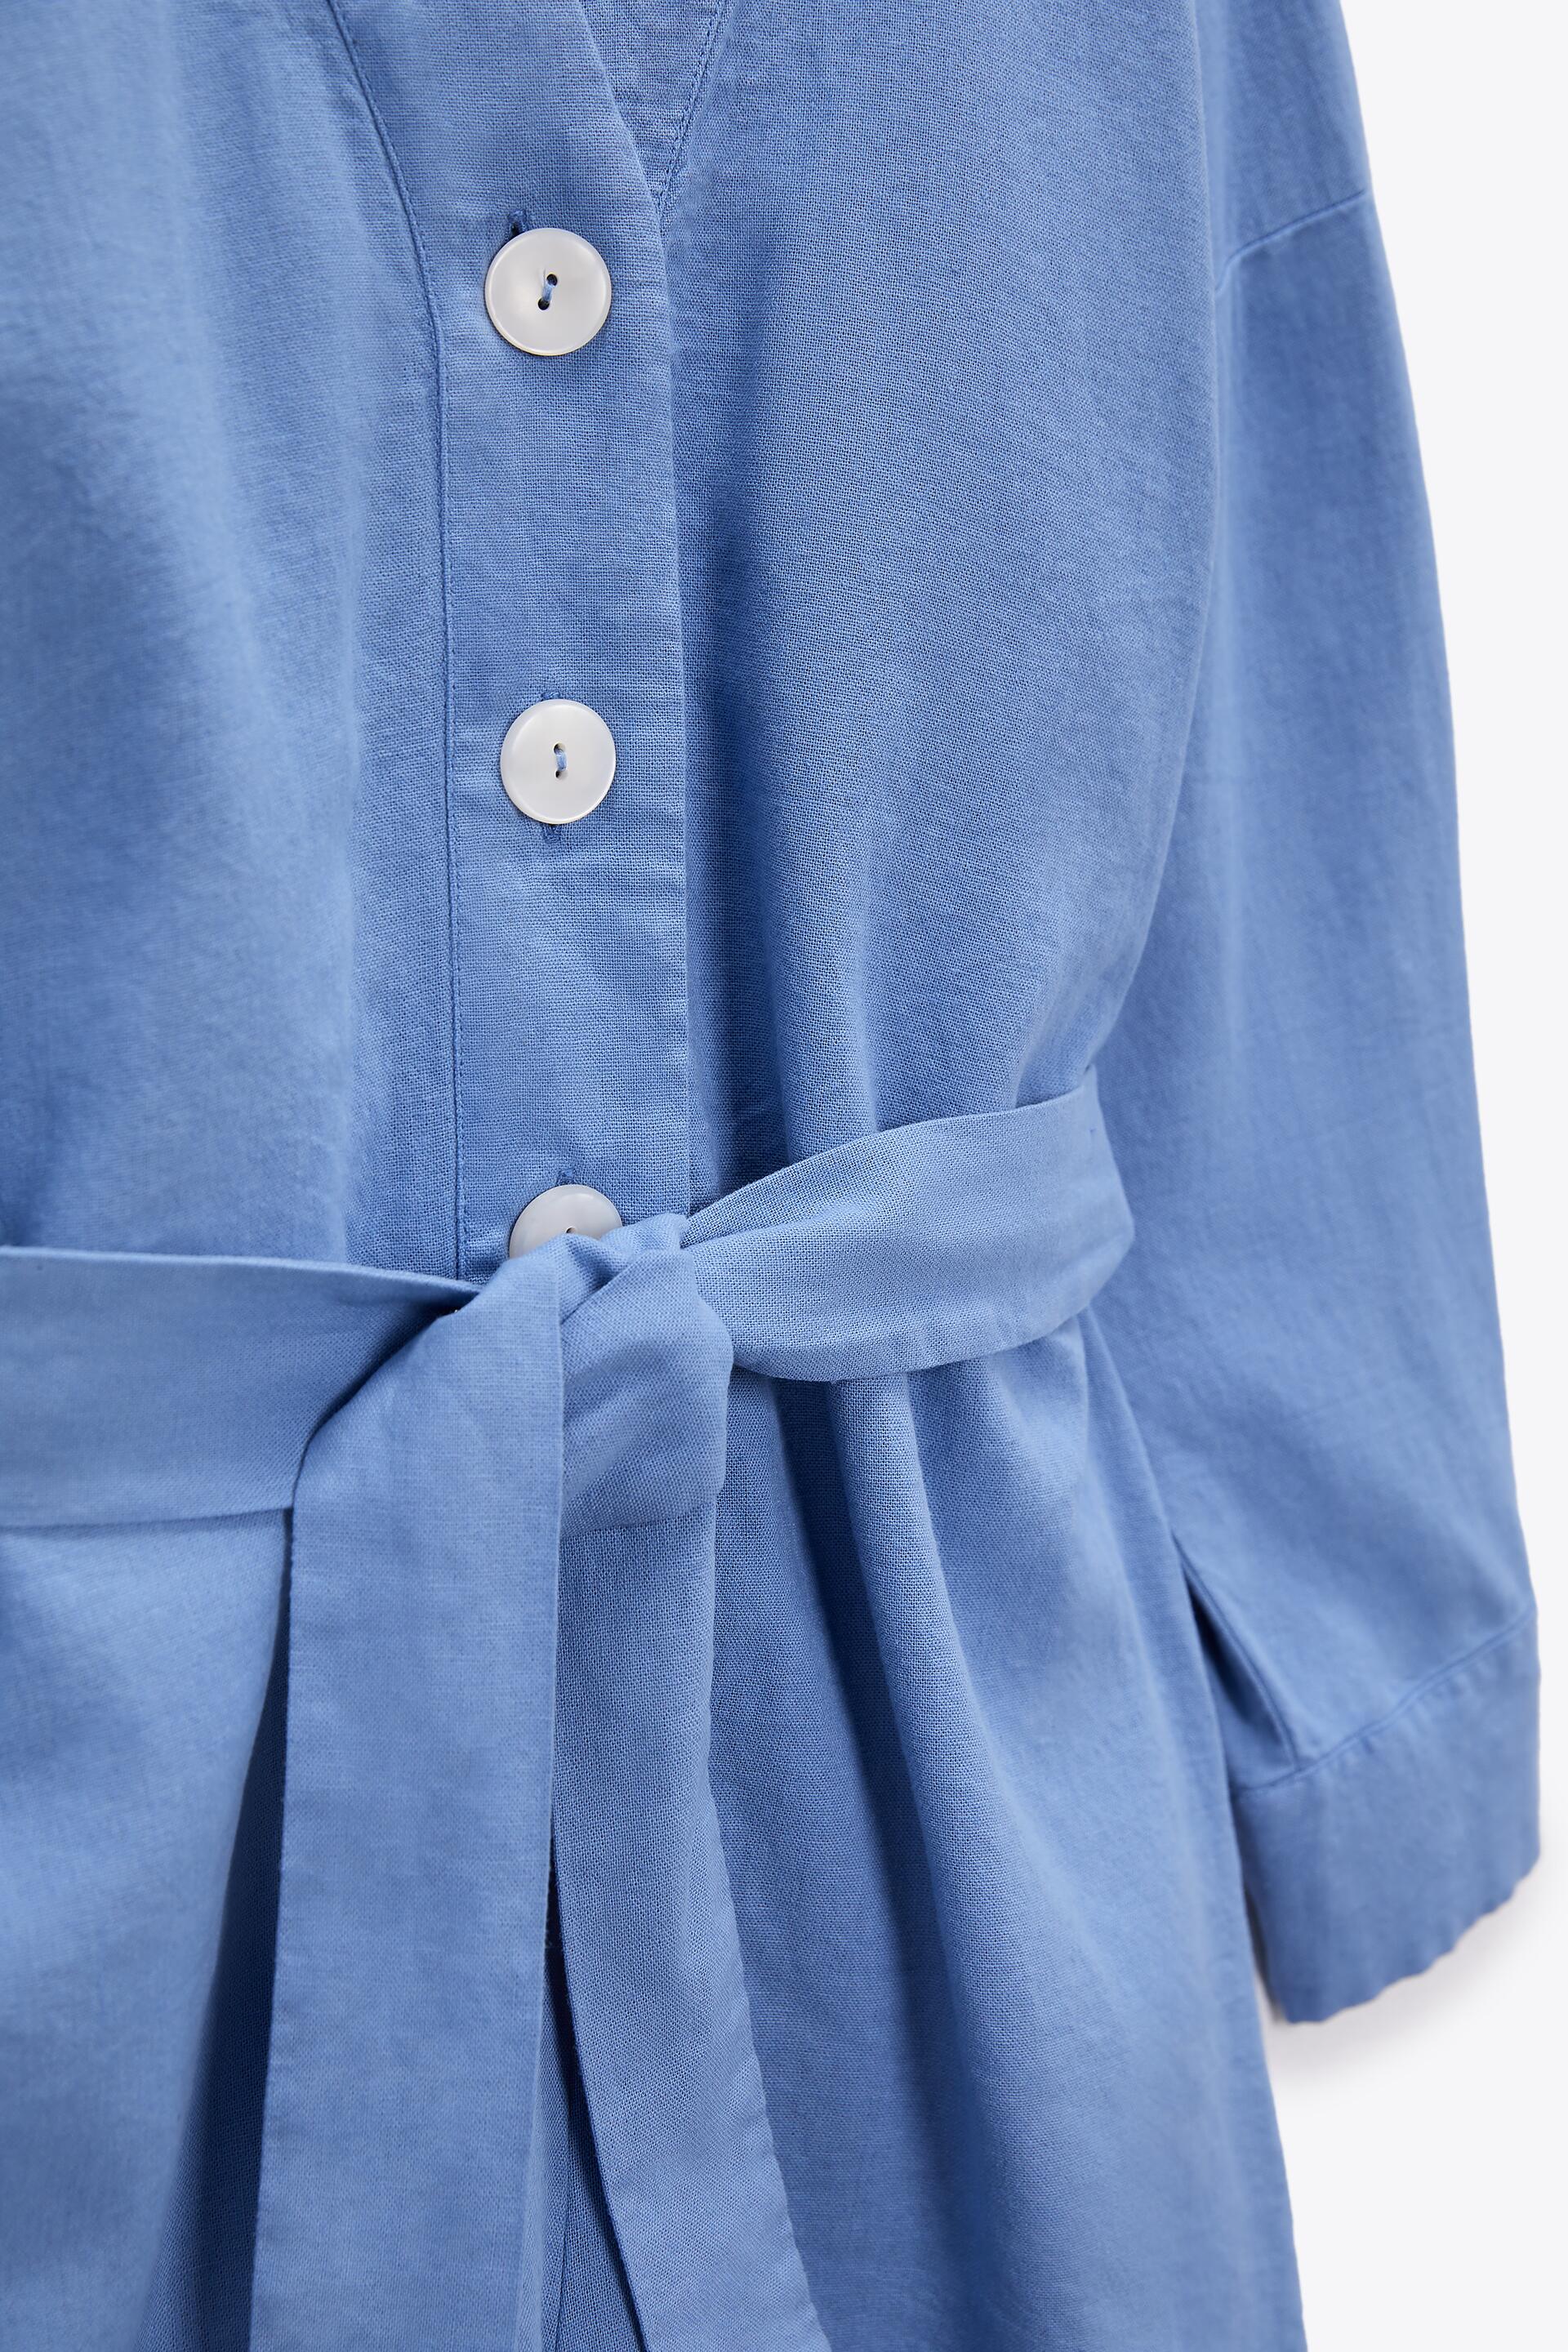 Zara Linen Blend Belted Short Jumpsuit - Big Apple Buddy